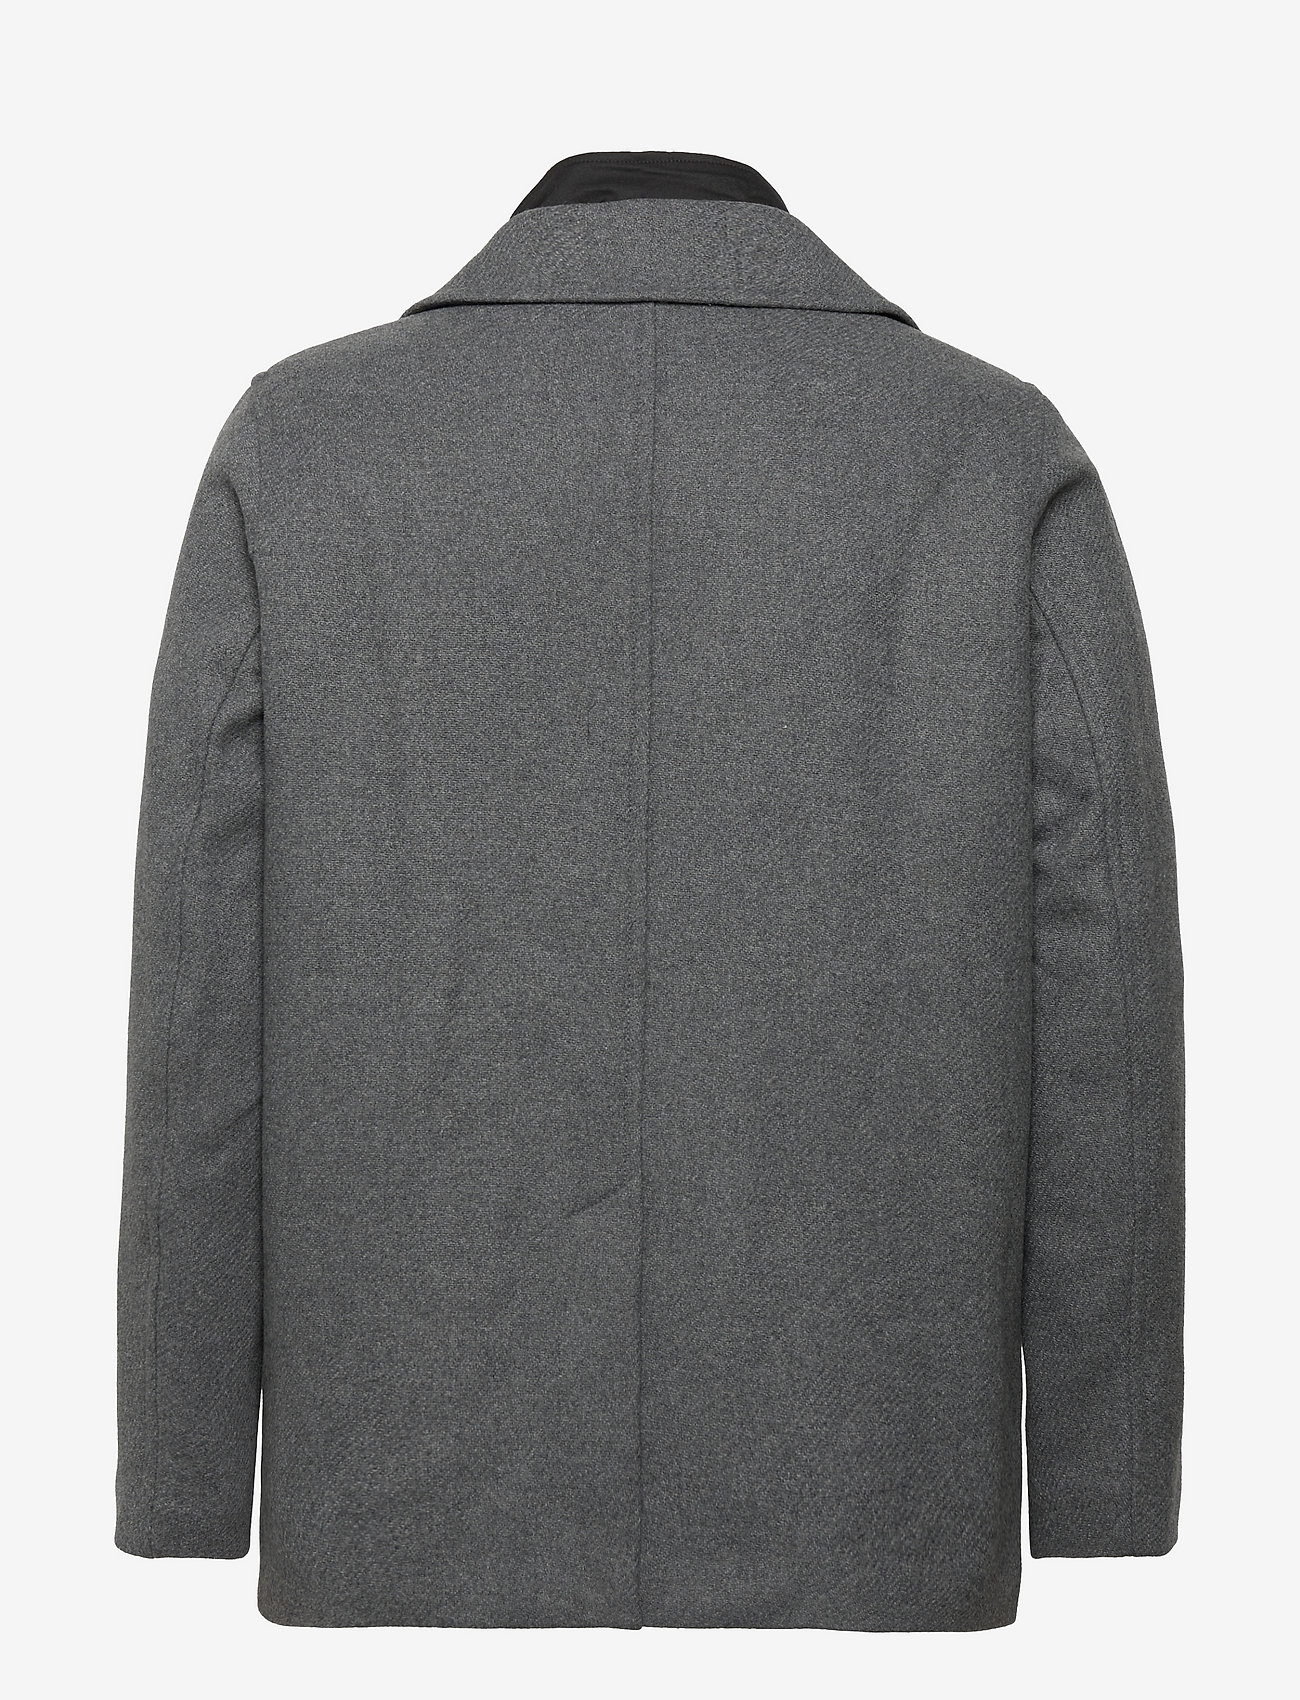 Esprit Casual - Men Coats woven regular - ulljackor - grey 5 - 1